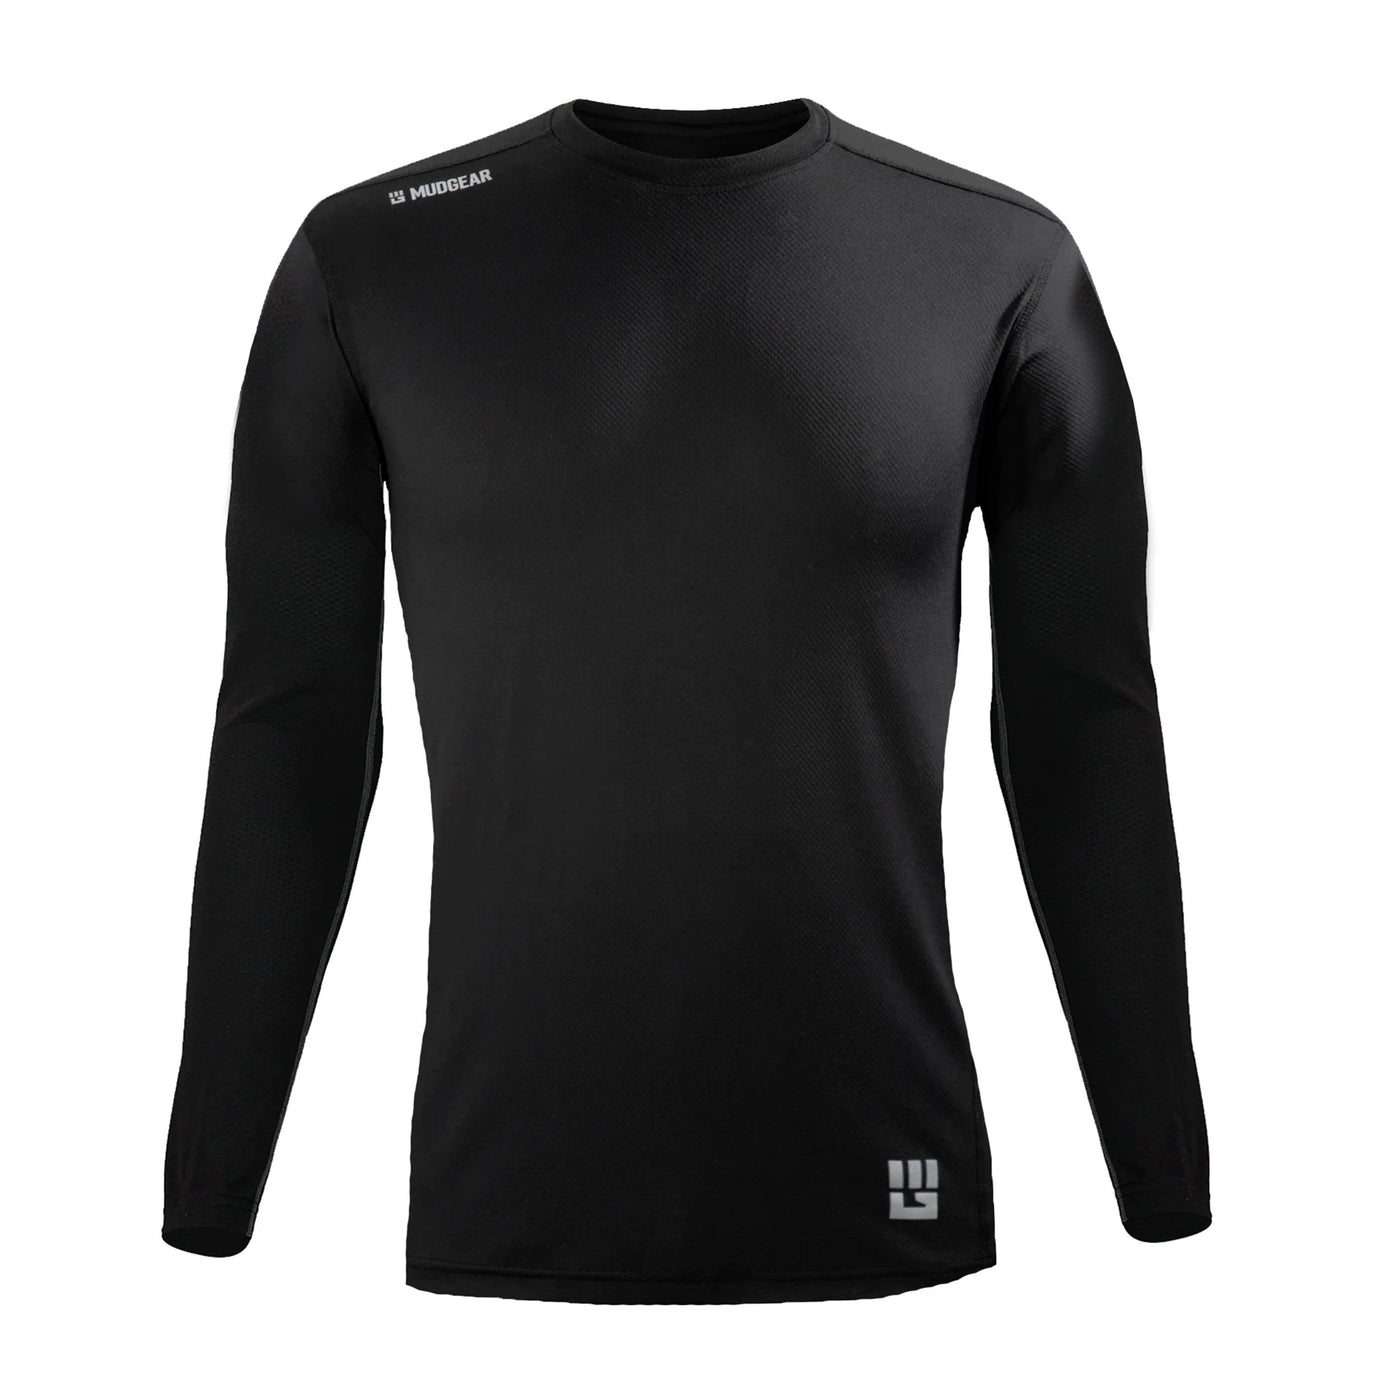 Mudgear Men's Fitted Performance Shirt VX - Long Sleeve (Black) Front